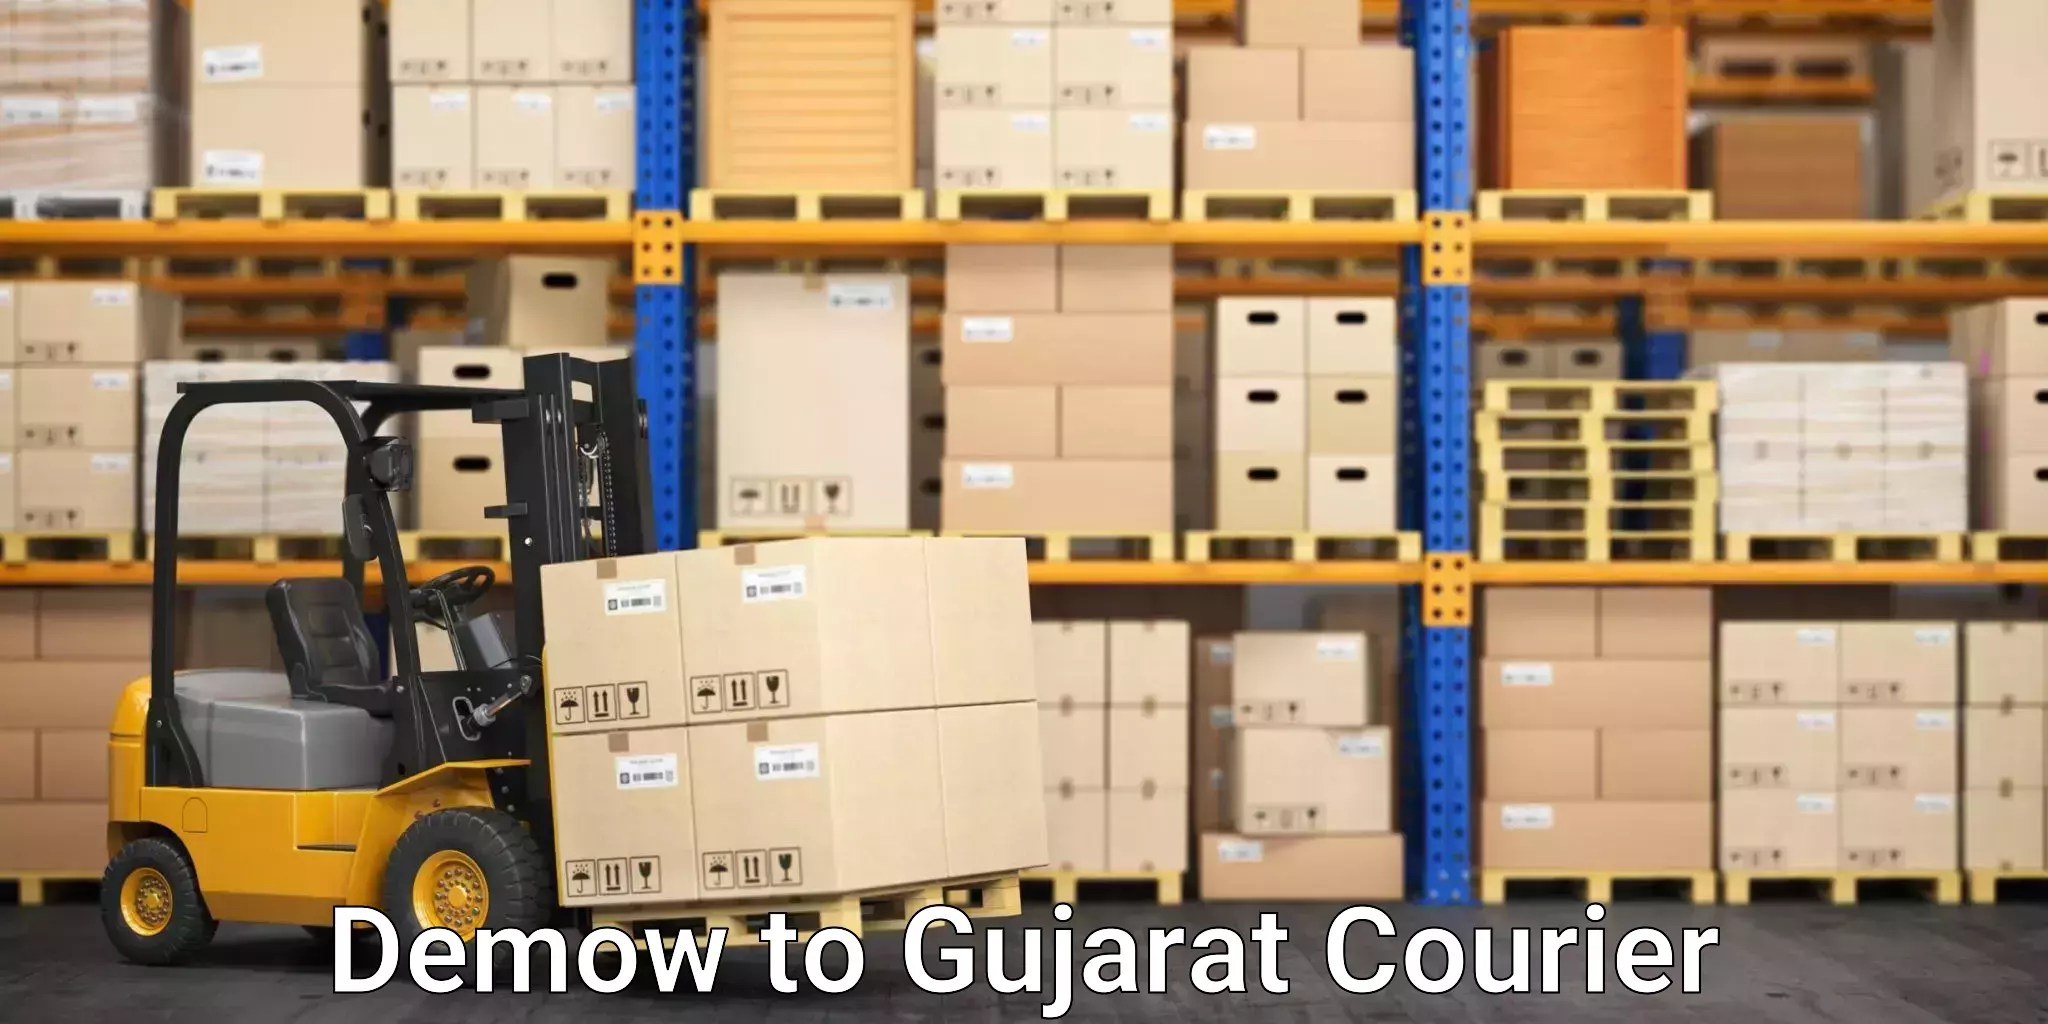 Courier service comparison Demow to Gujarat